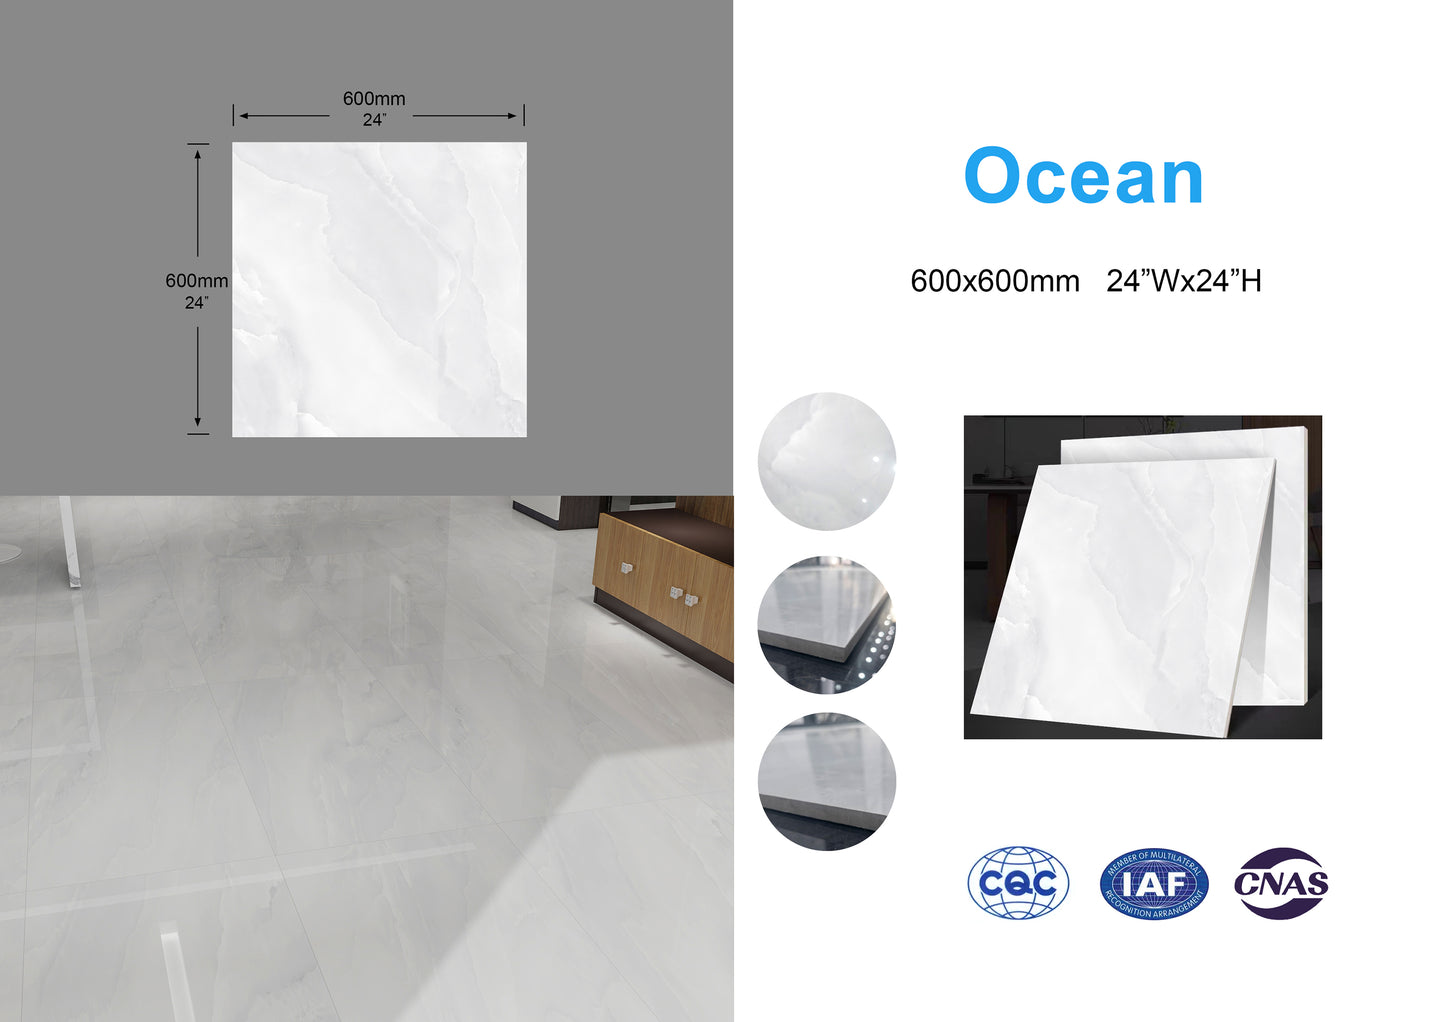 Ocean family Full Polished Glazed Tile light gray 24"x24" 4pcs/box 16sf/box $23.84/BOX $1.49/sf